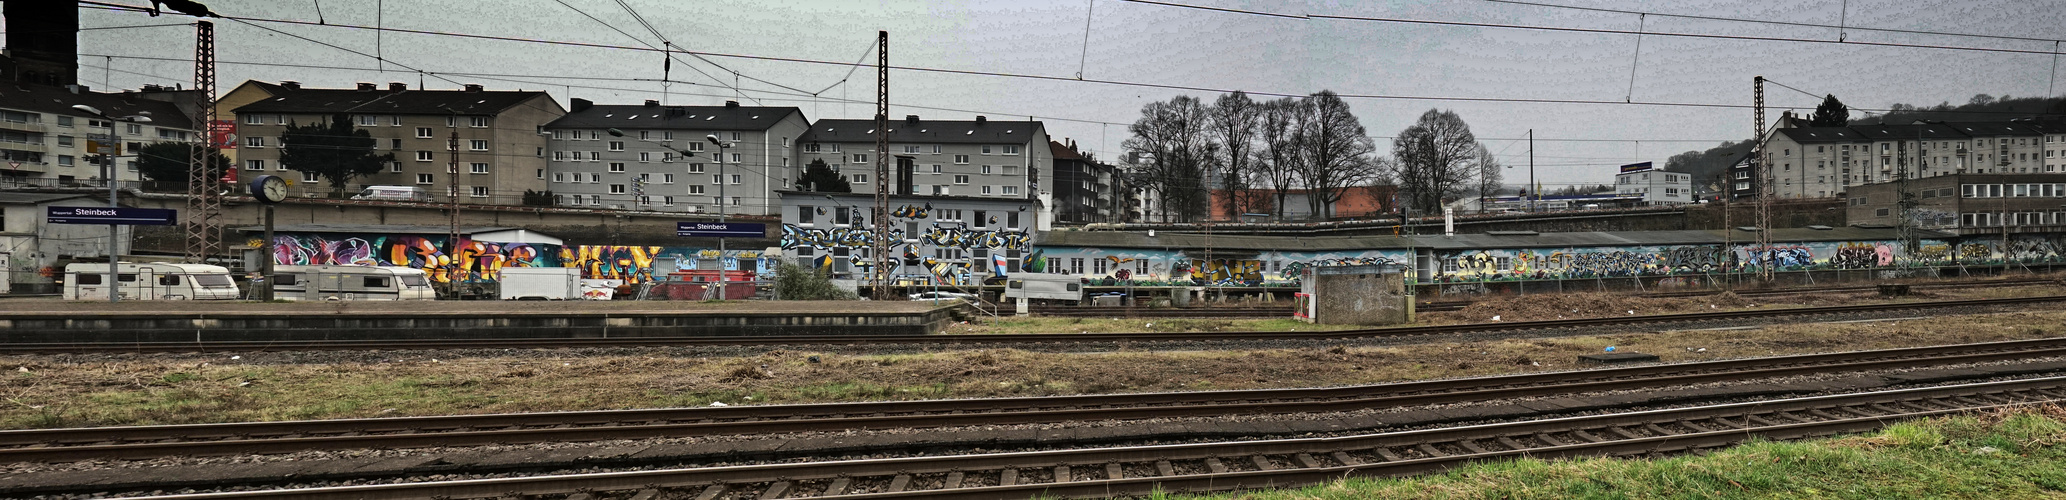 Graffiti am Steinbecker Bahnhof